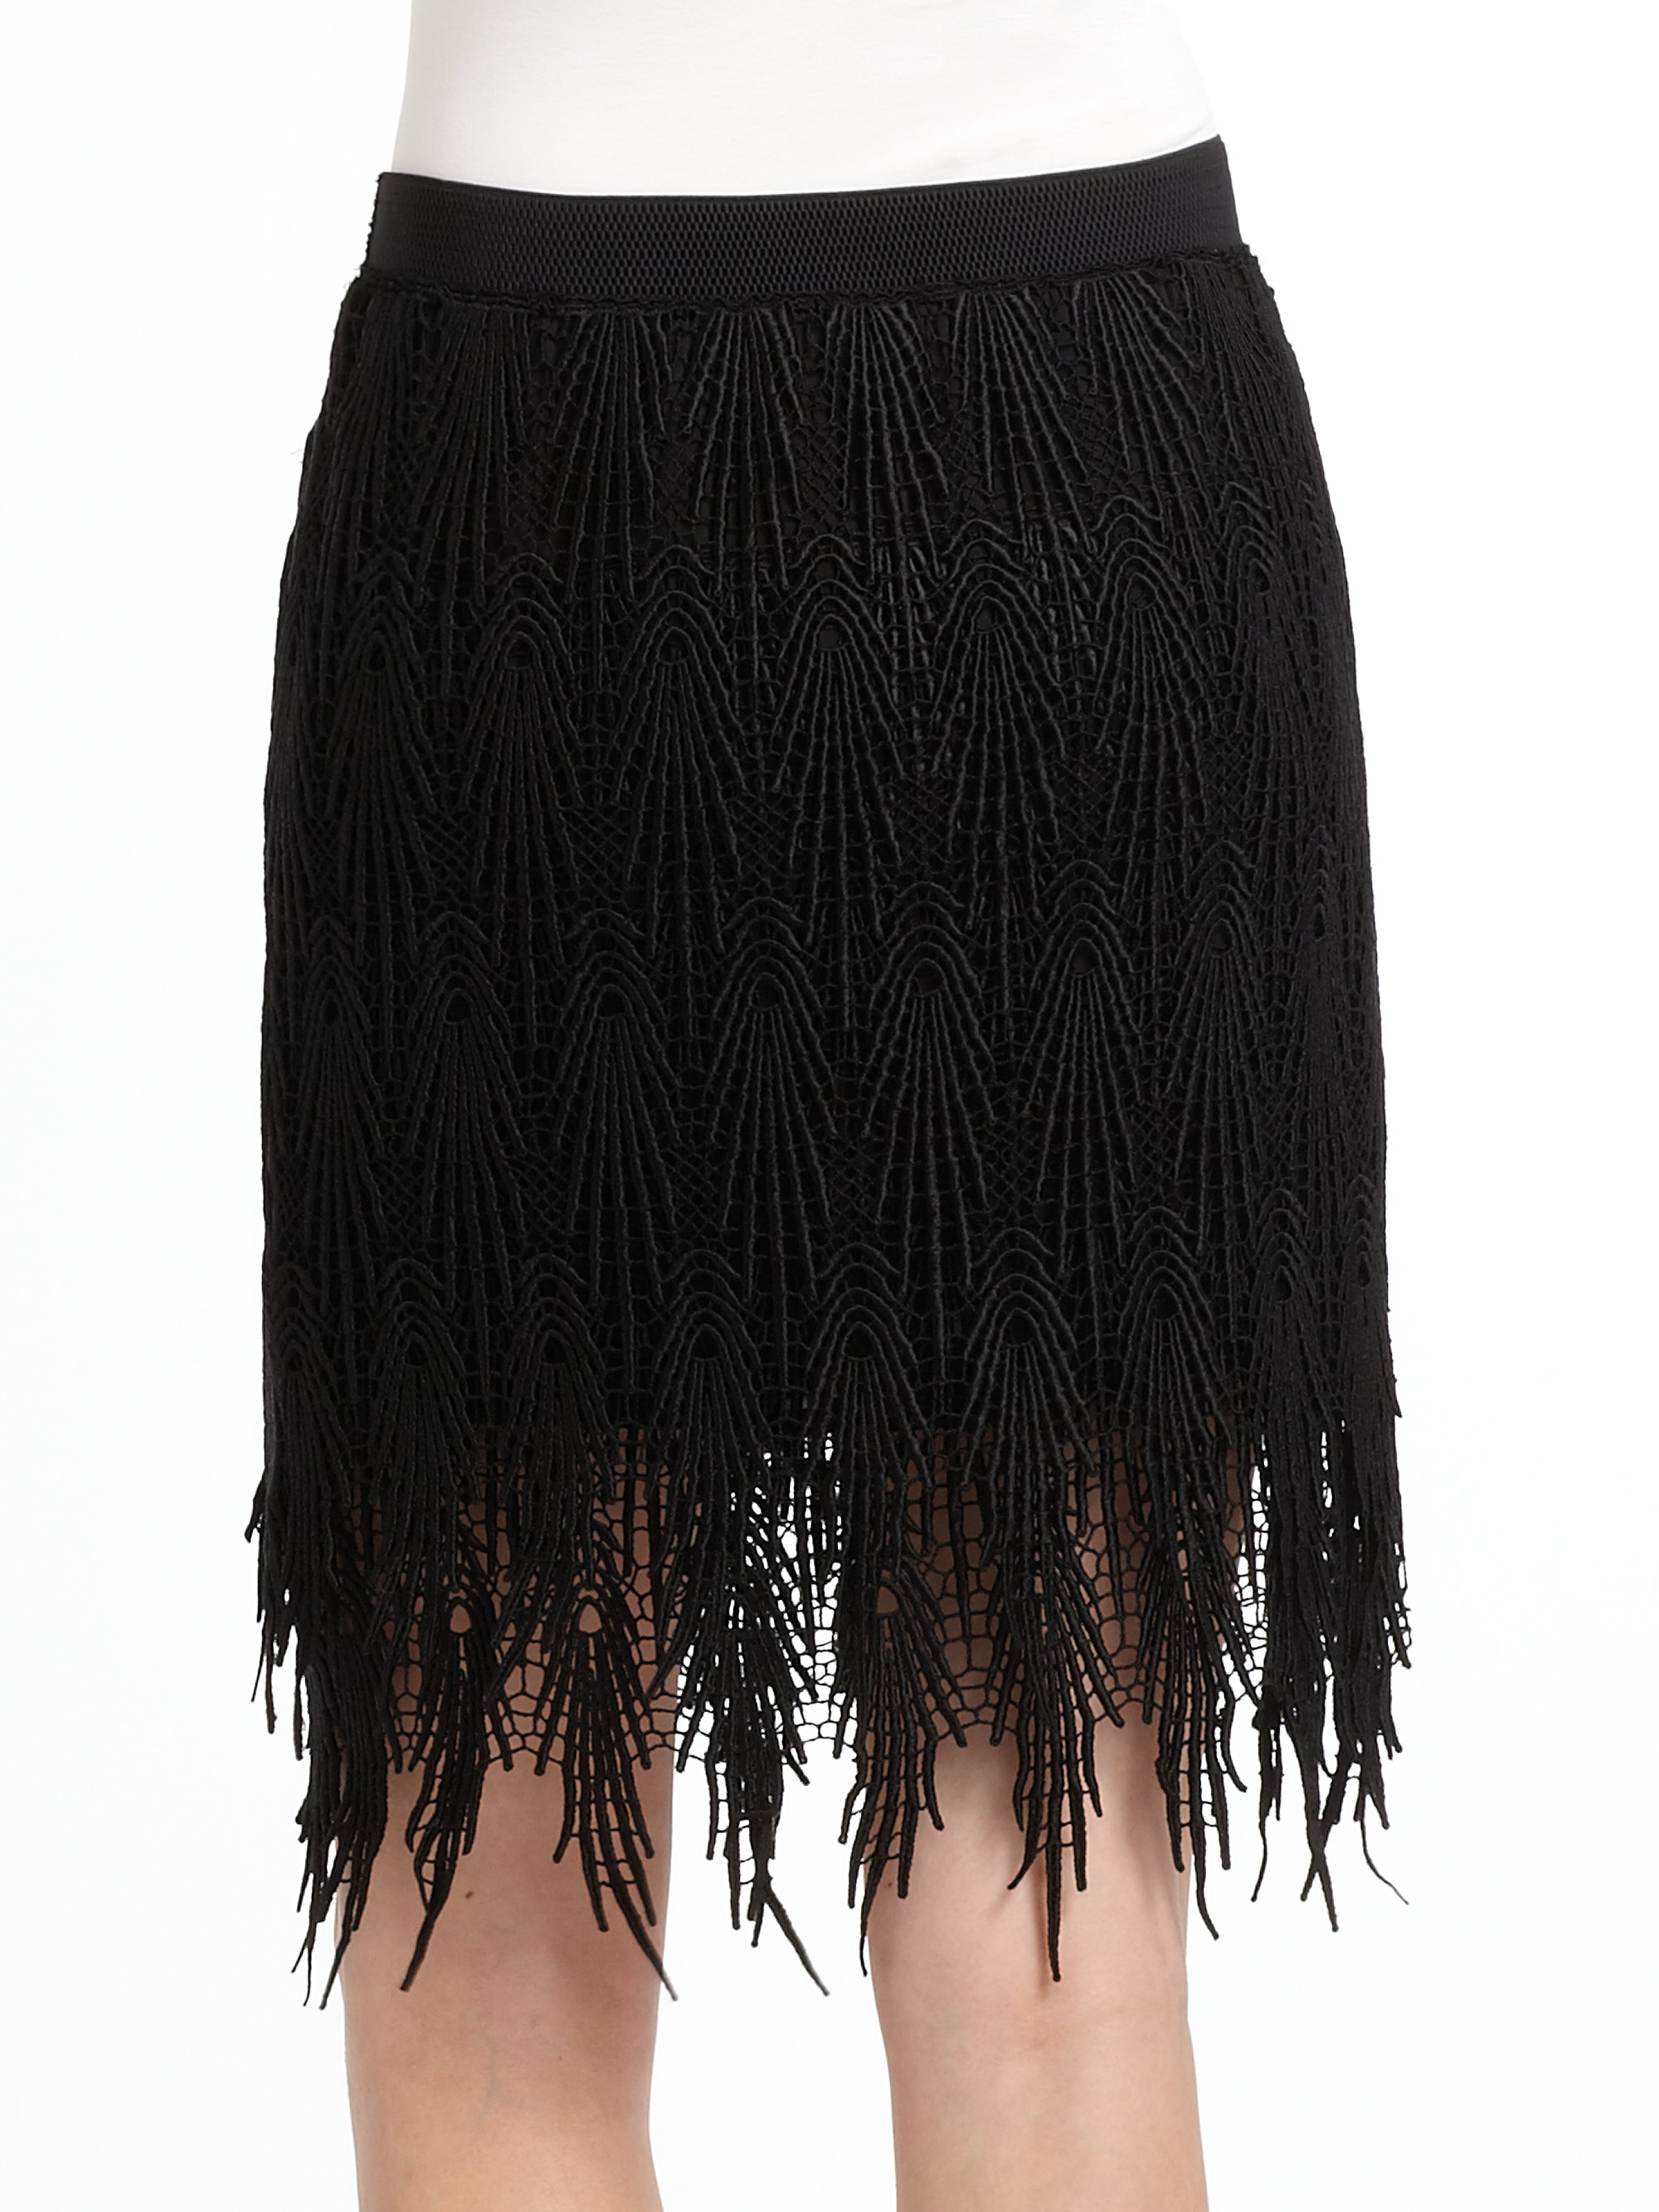 Vivienne Tam Lace Fringe Skirt in Black | Lyst